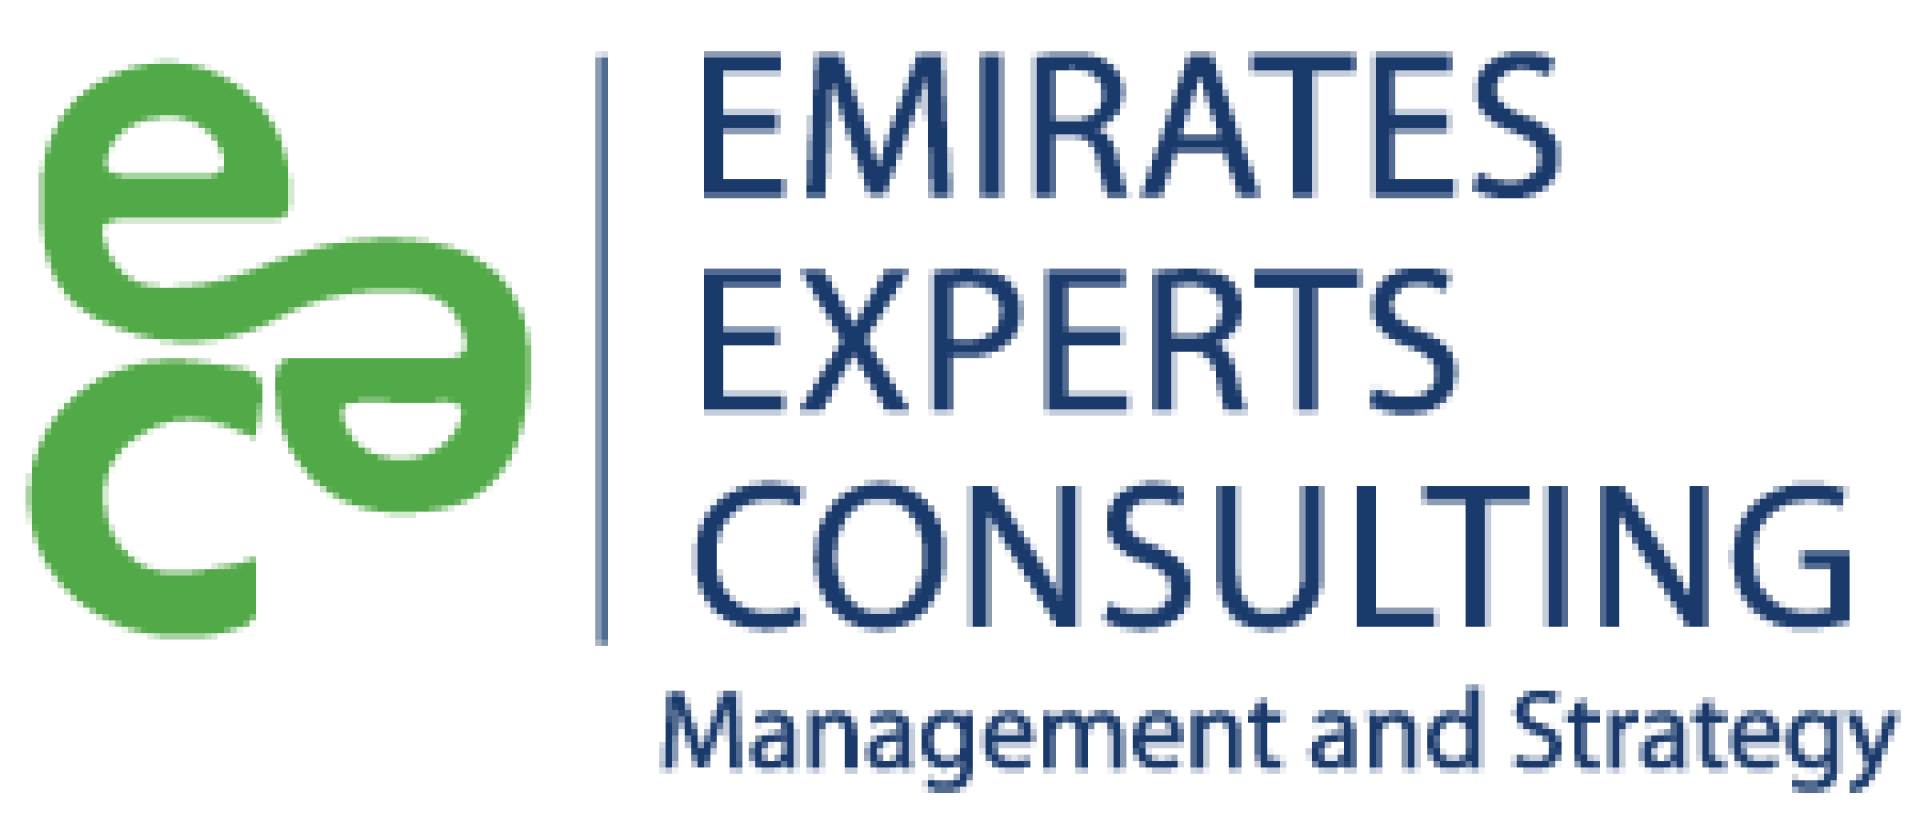 Emirates Experts Consulting logo